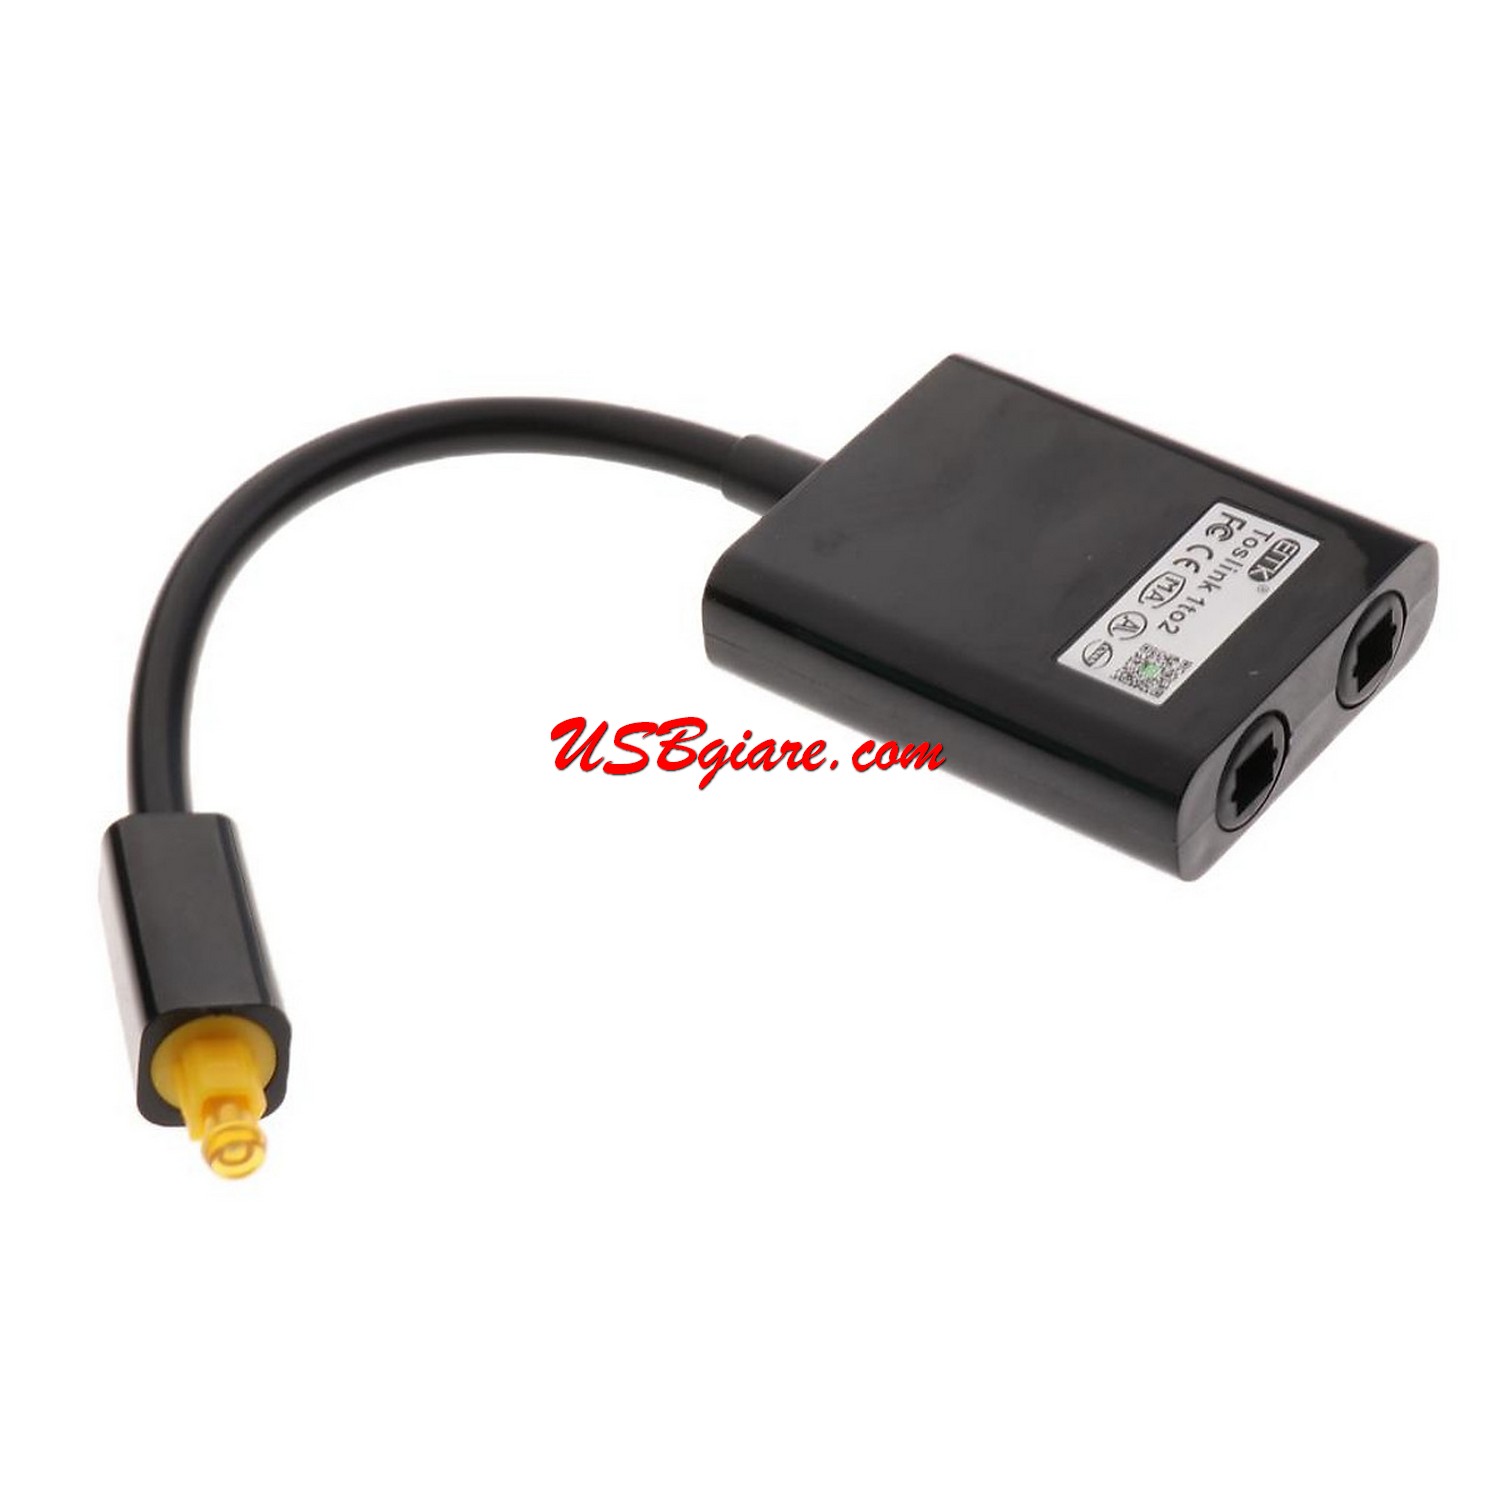 Splitter Optical Fiber SPDIF Duplicator Adapter For Toslink Digital Audio Cable For Adios 1 Pack BLACK